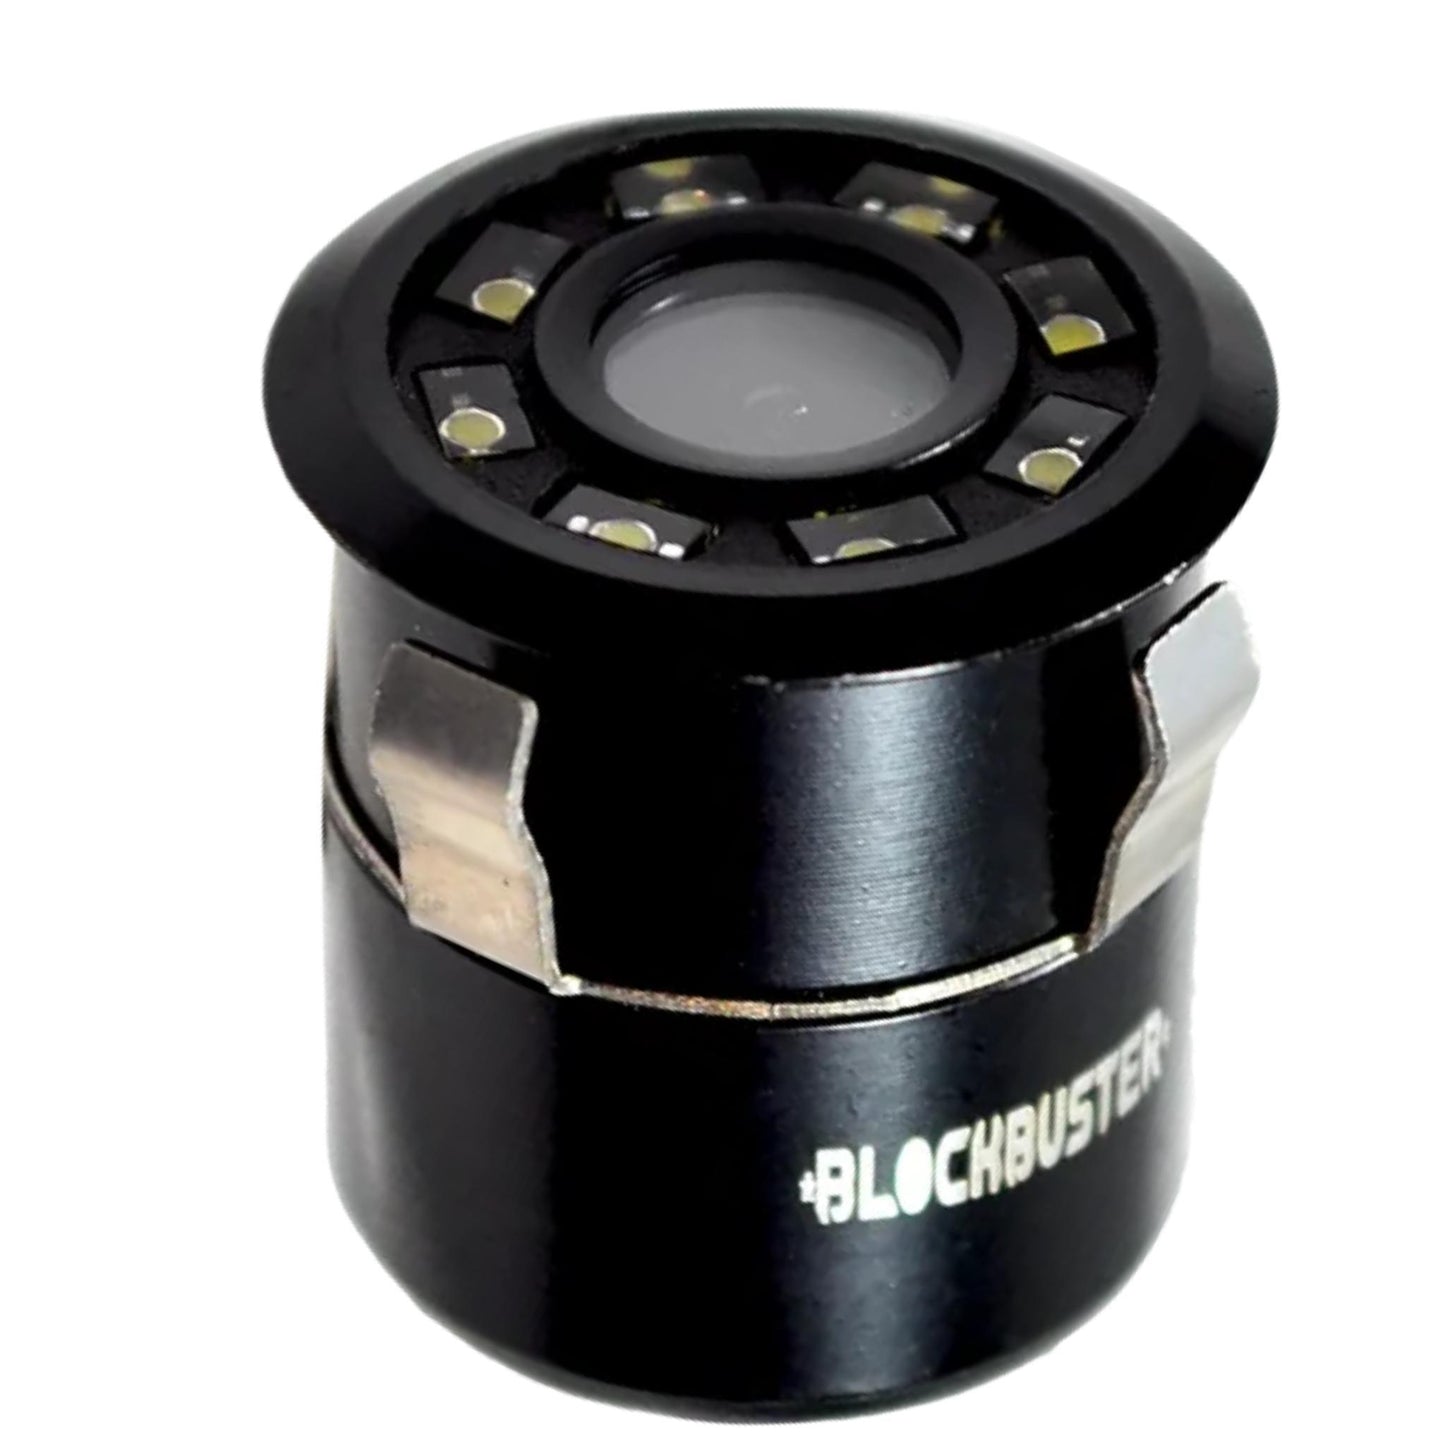 Blockbuster BBT-555 Backup camera for Car